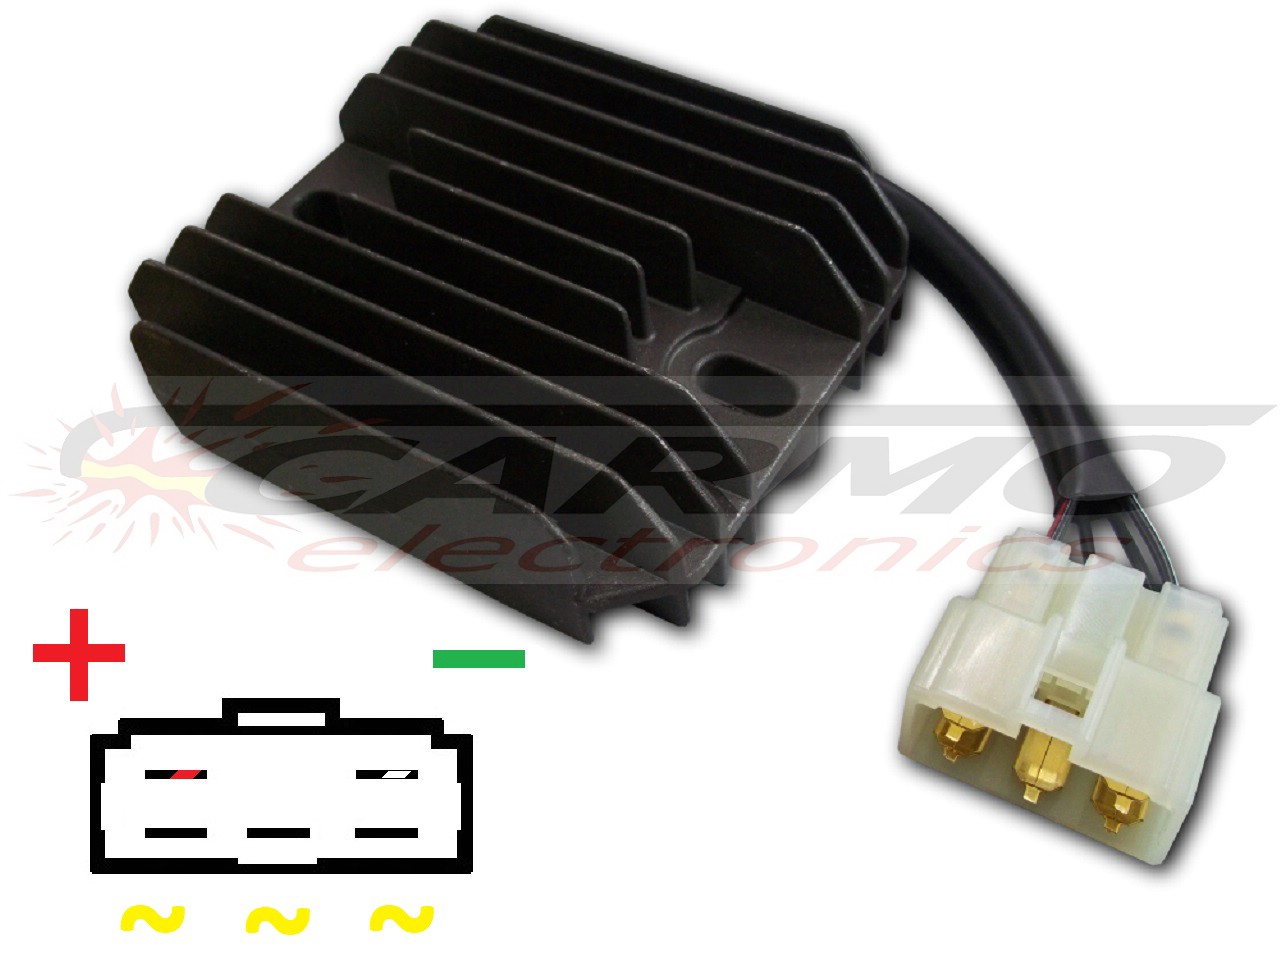 CARR201 - MOSFET Spanningsregelaar gelijkrichter (SH535A-12, SH650-12, SH532-12) - Clique na Imagem para Fechar